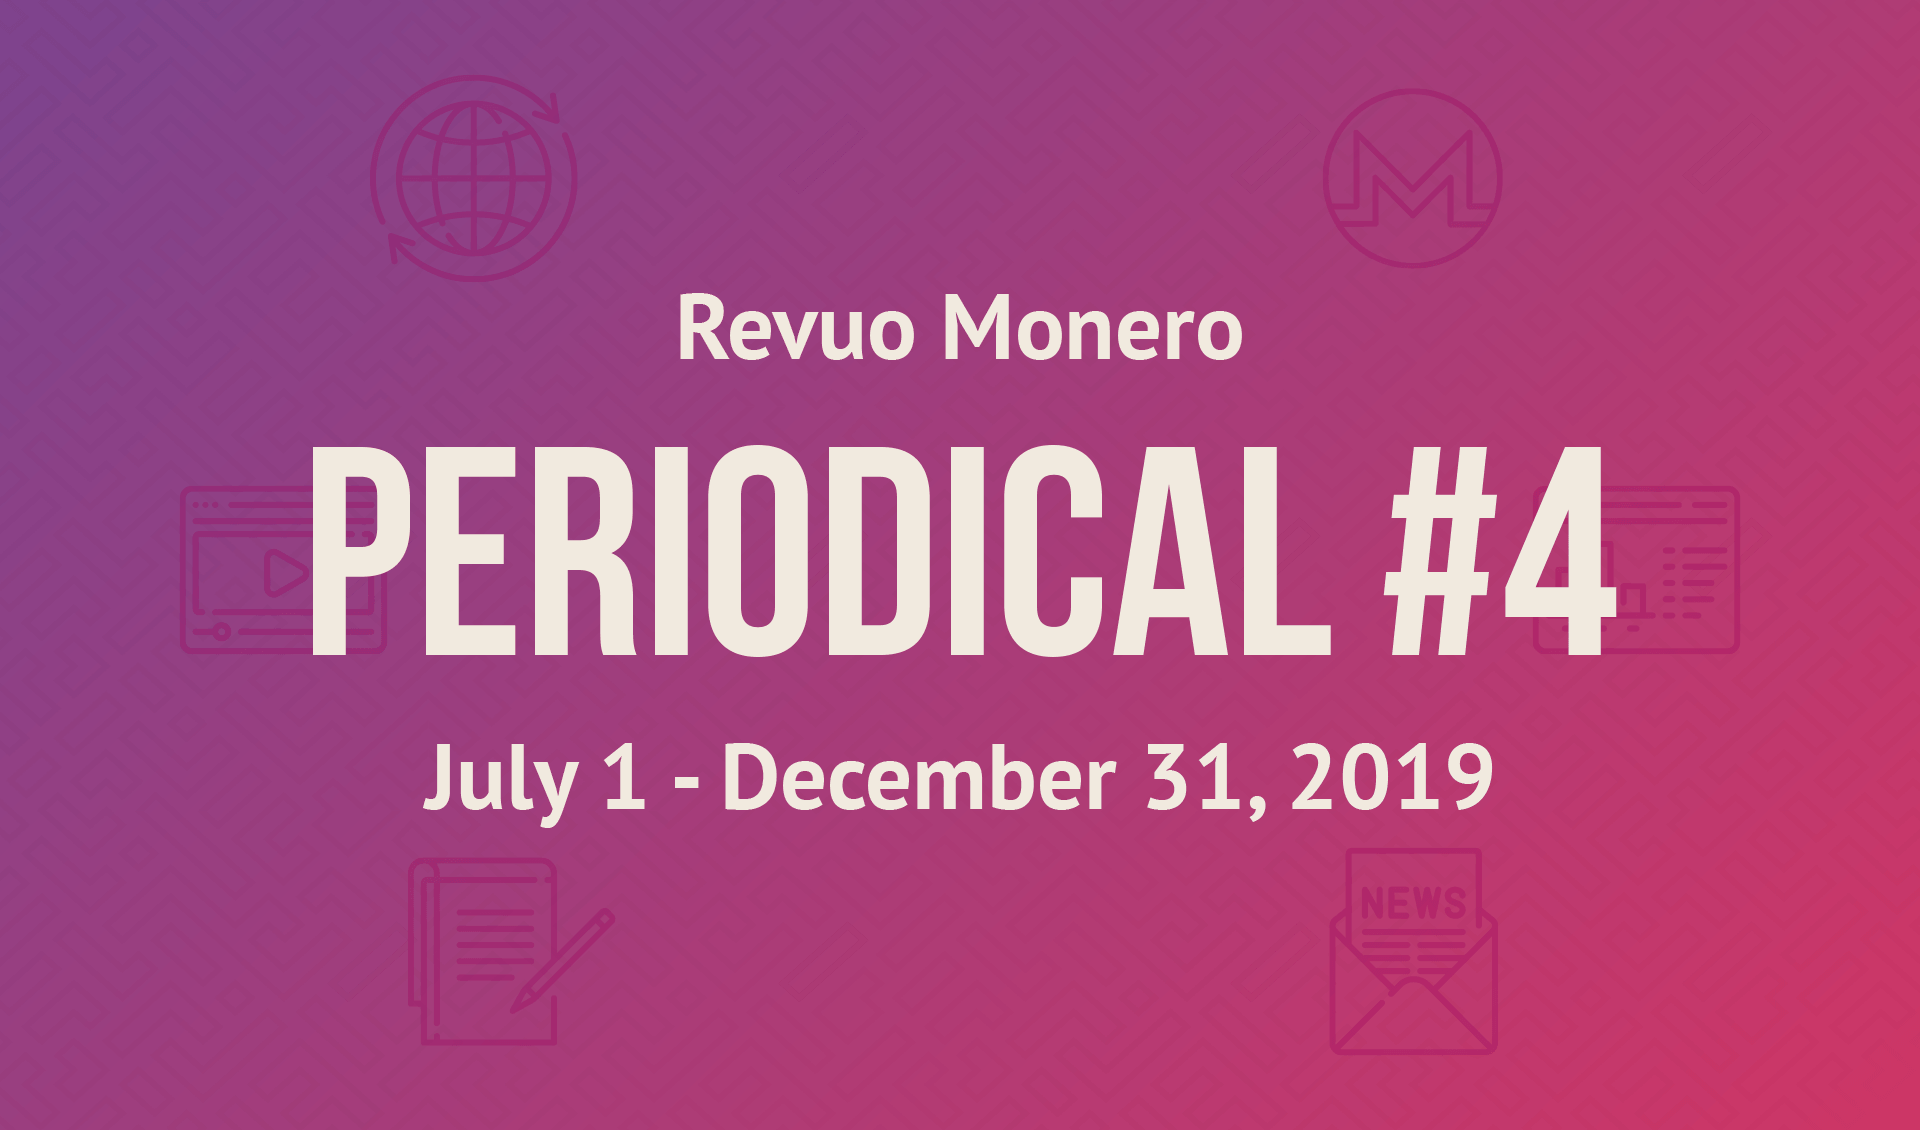 Revuo Monero Periodical #4 Slide